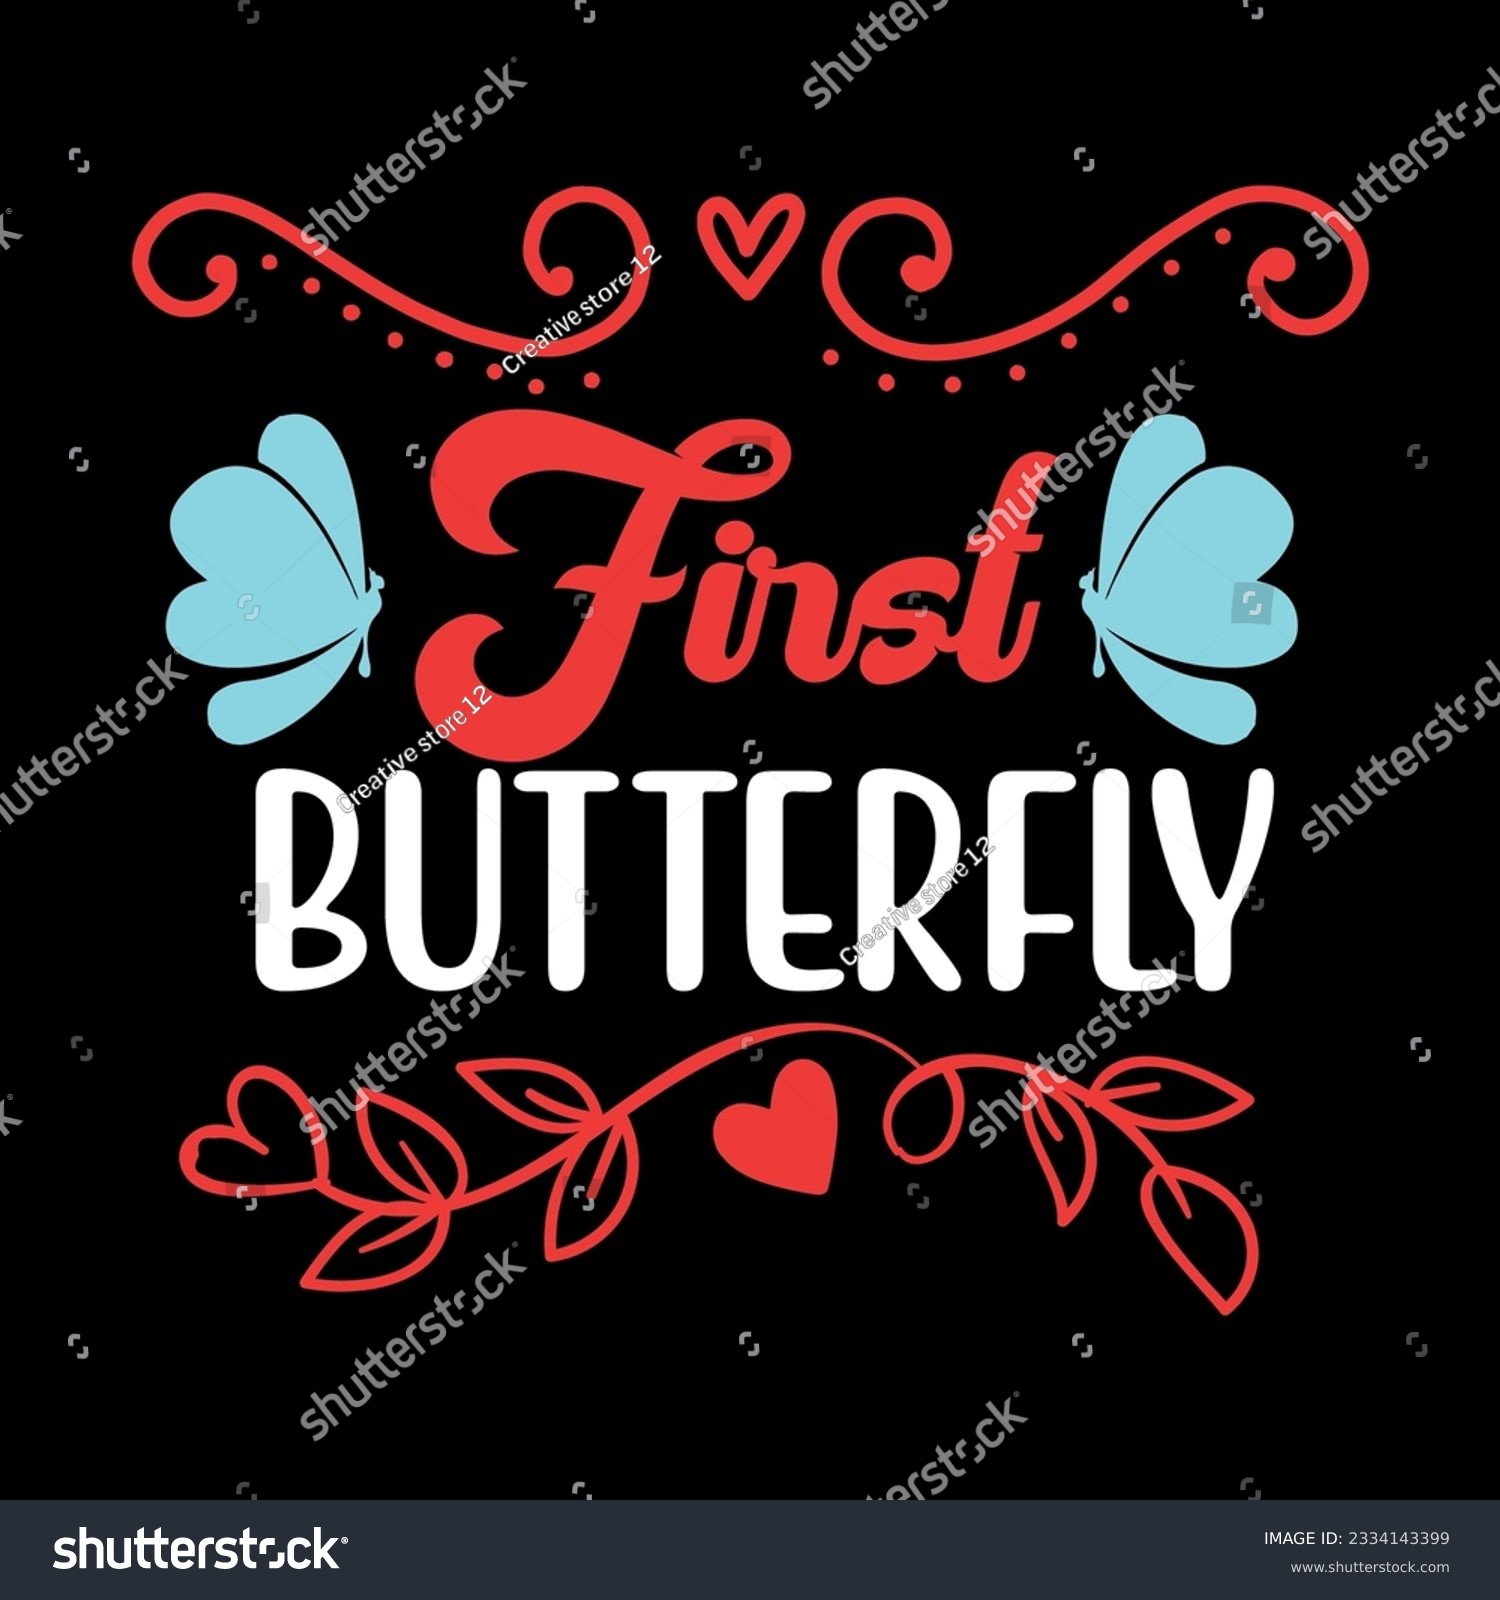 SVG of Butterfly Vector, Butterfly SVG Design svg